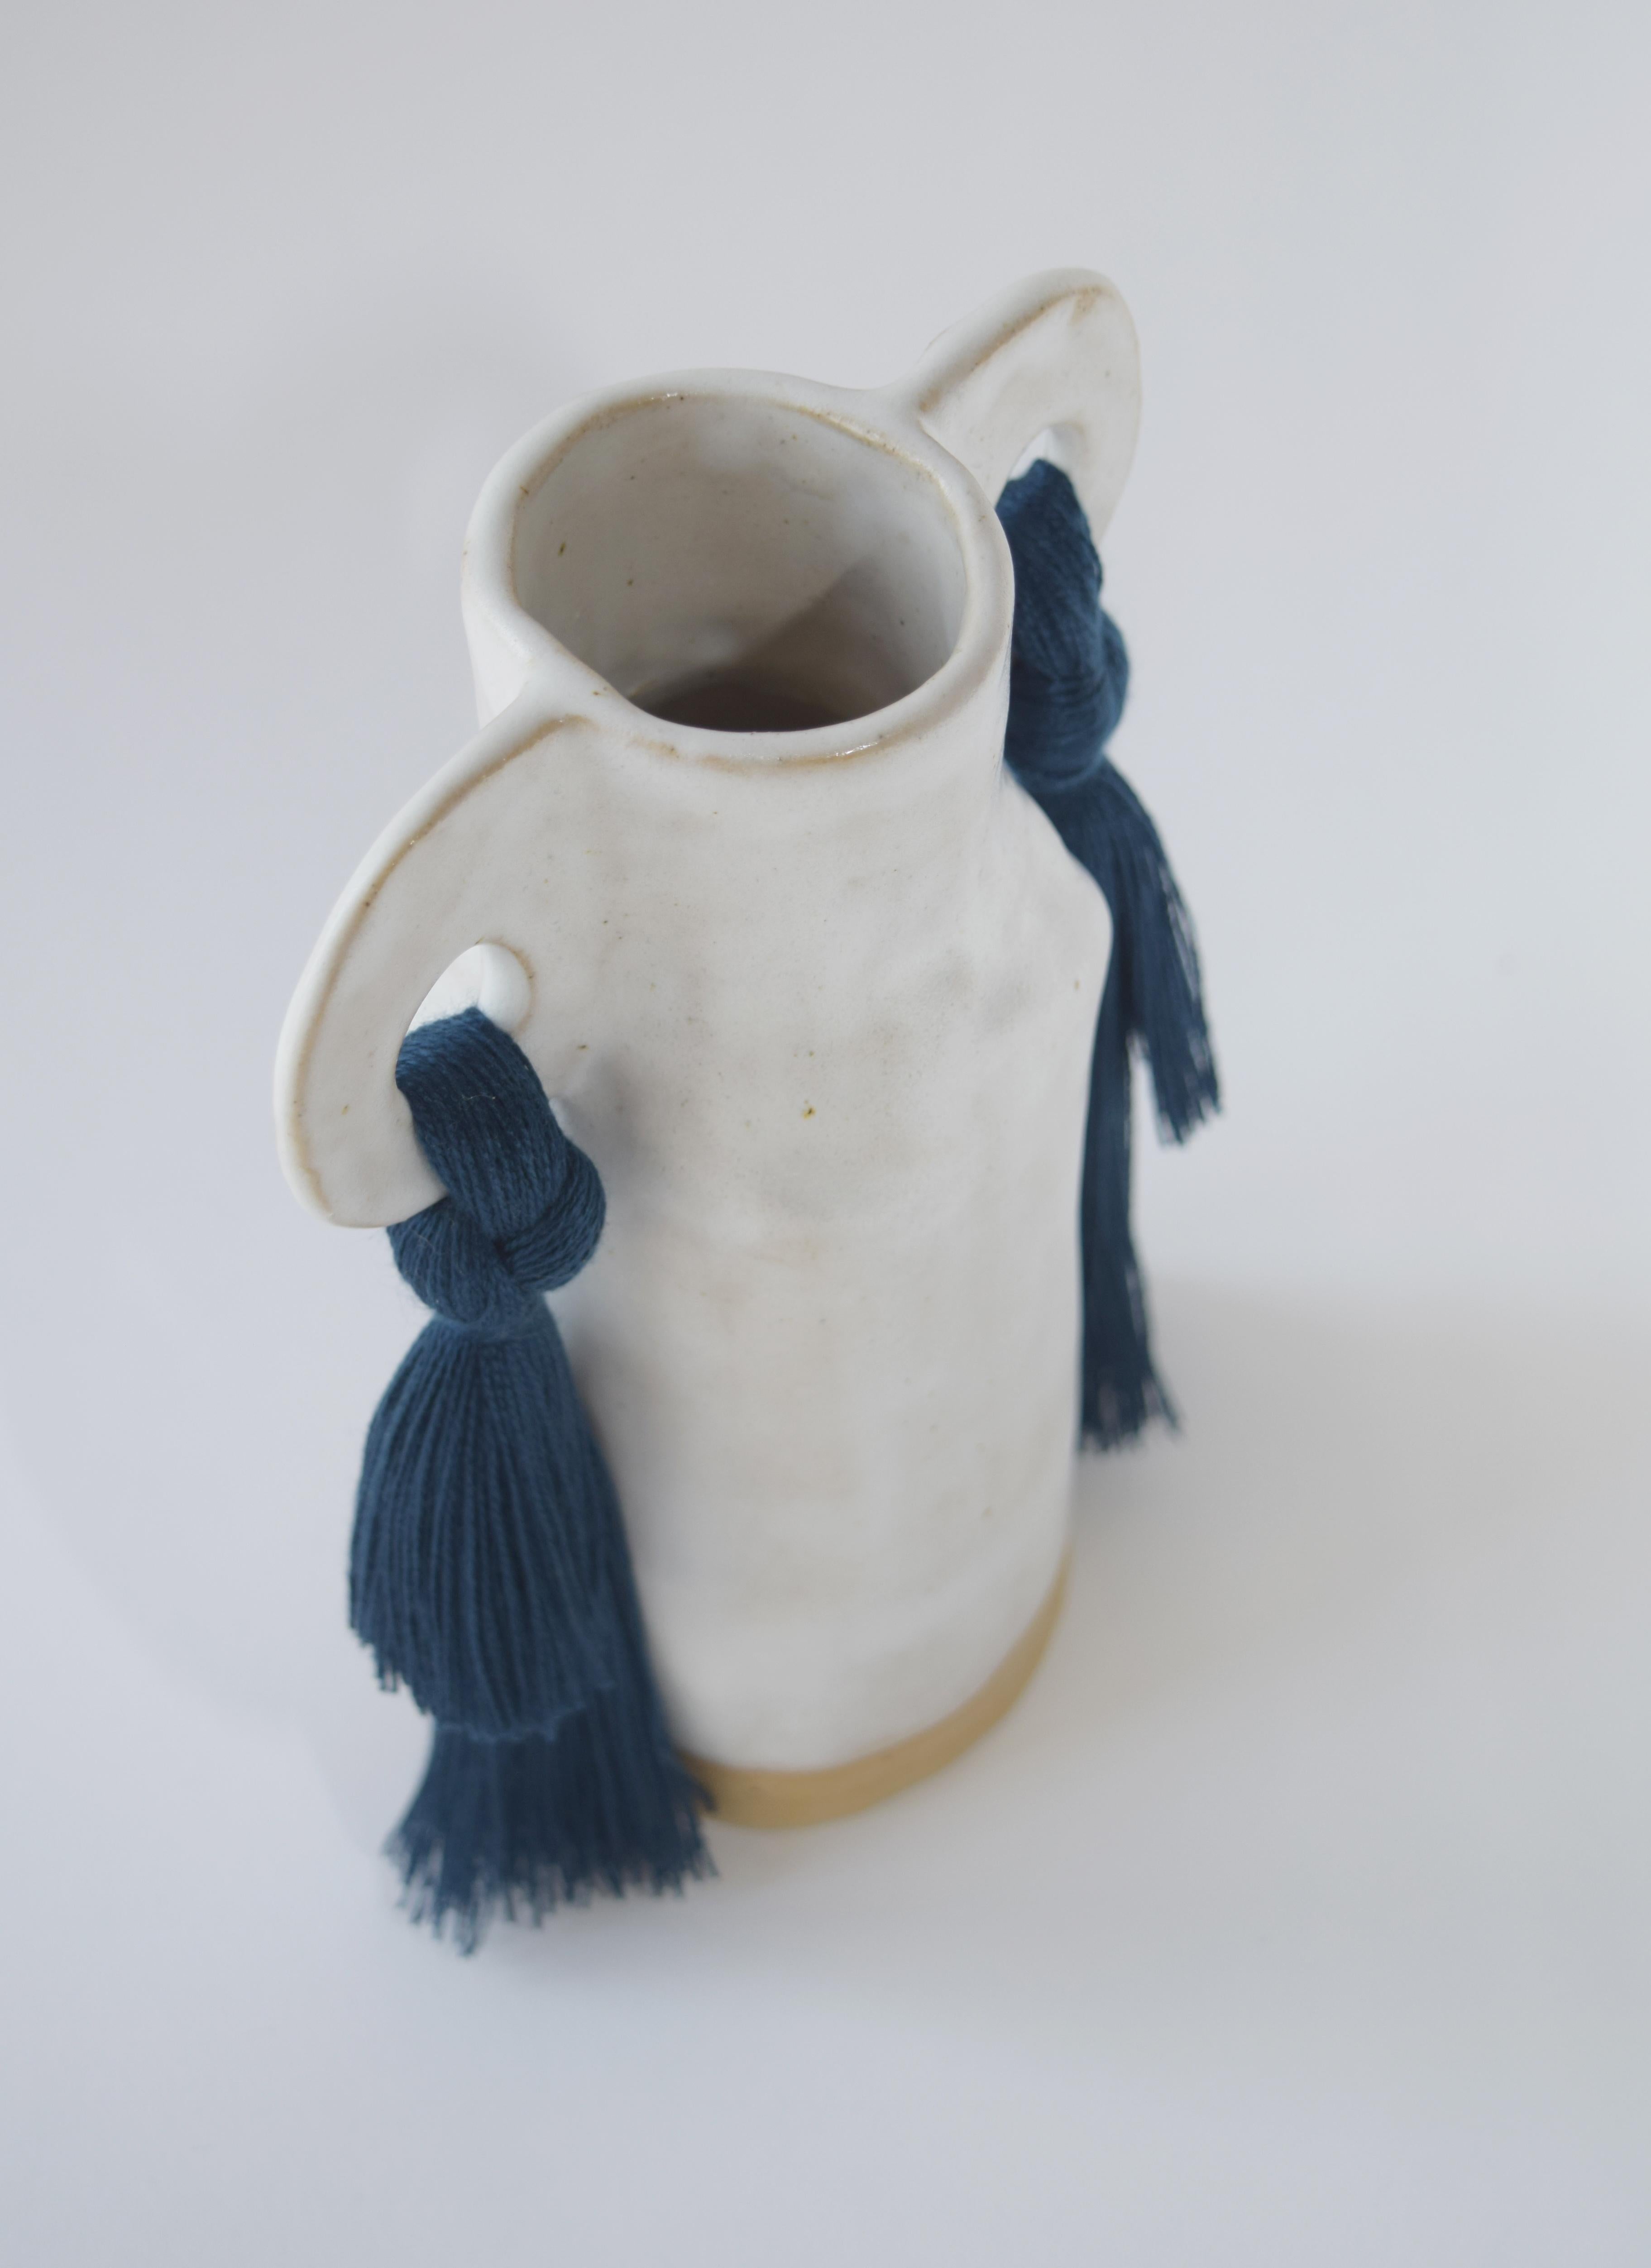 Hand-Crafted Handmade Ceramic Vase #606 in White Glaze with Navy Tencel Fringe Details For Sale